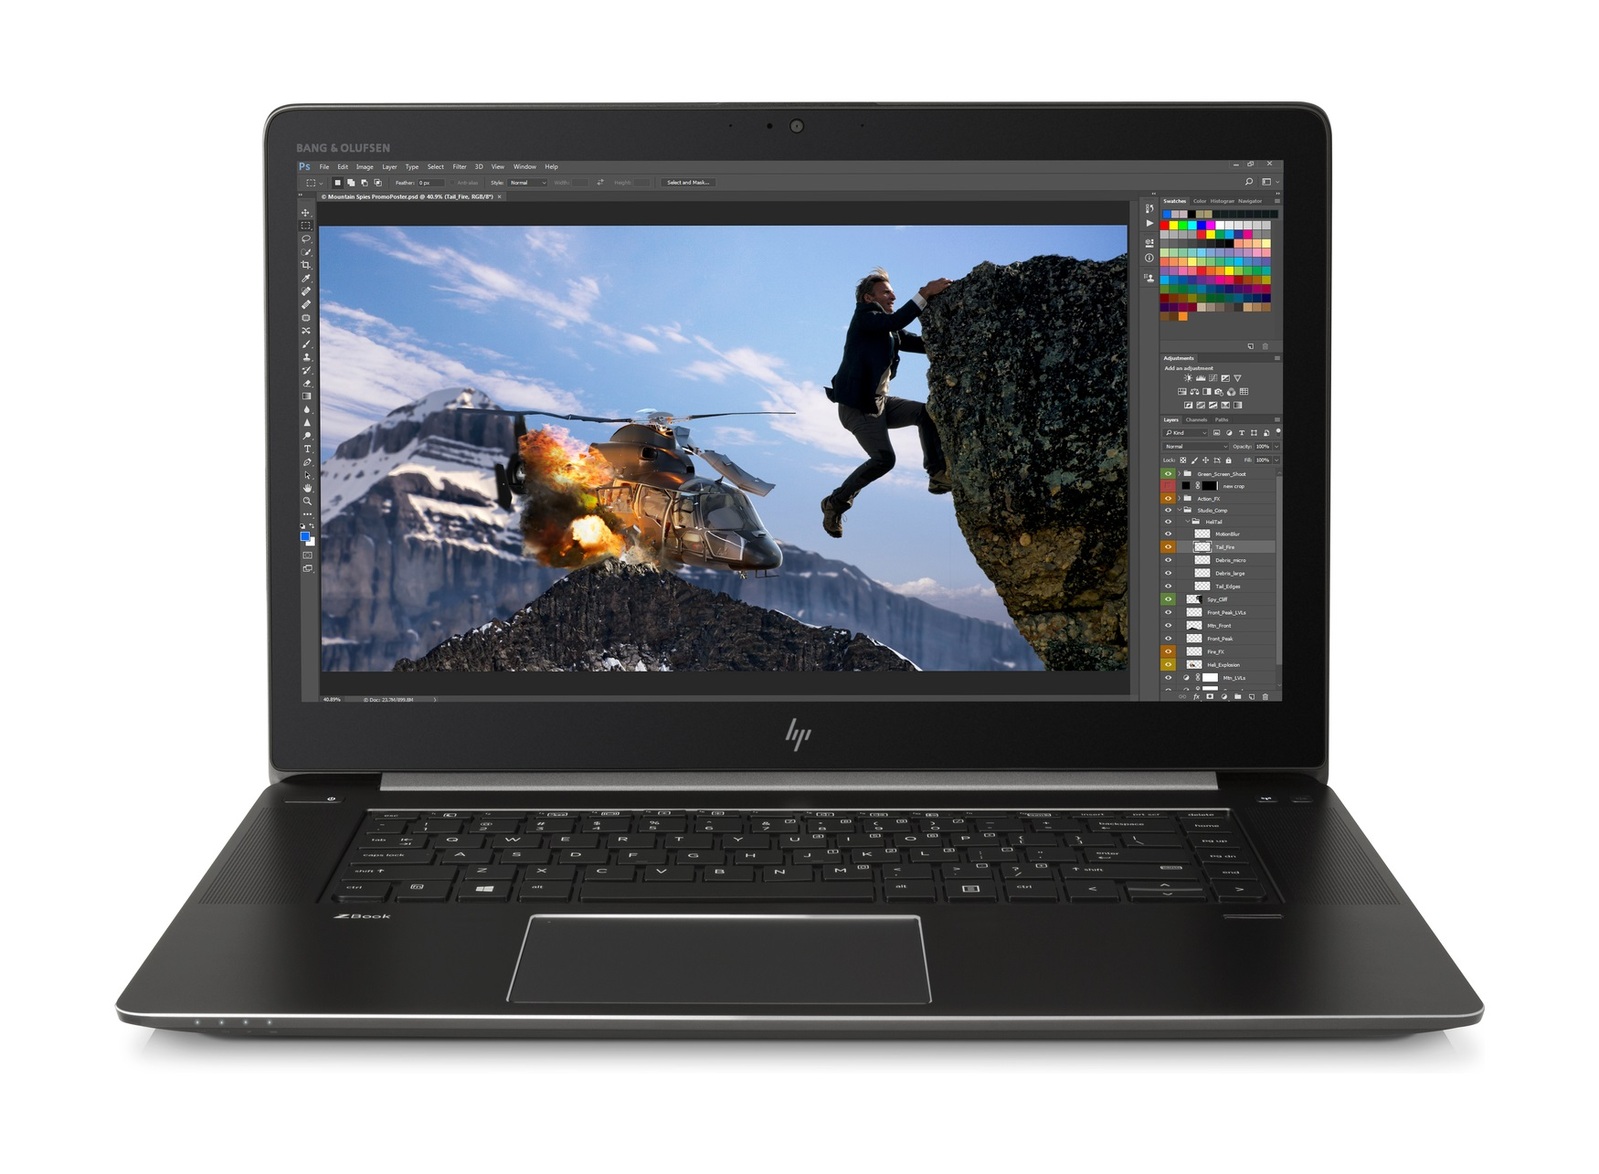 HP ZBook Studio G4 Intel Xeon E3-1535M V6 3.10GHz 16GB RAM 512GB SSD 15.6" FHD Win 10